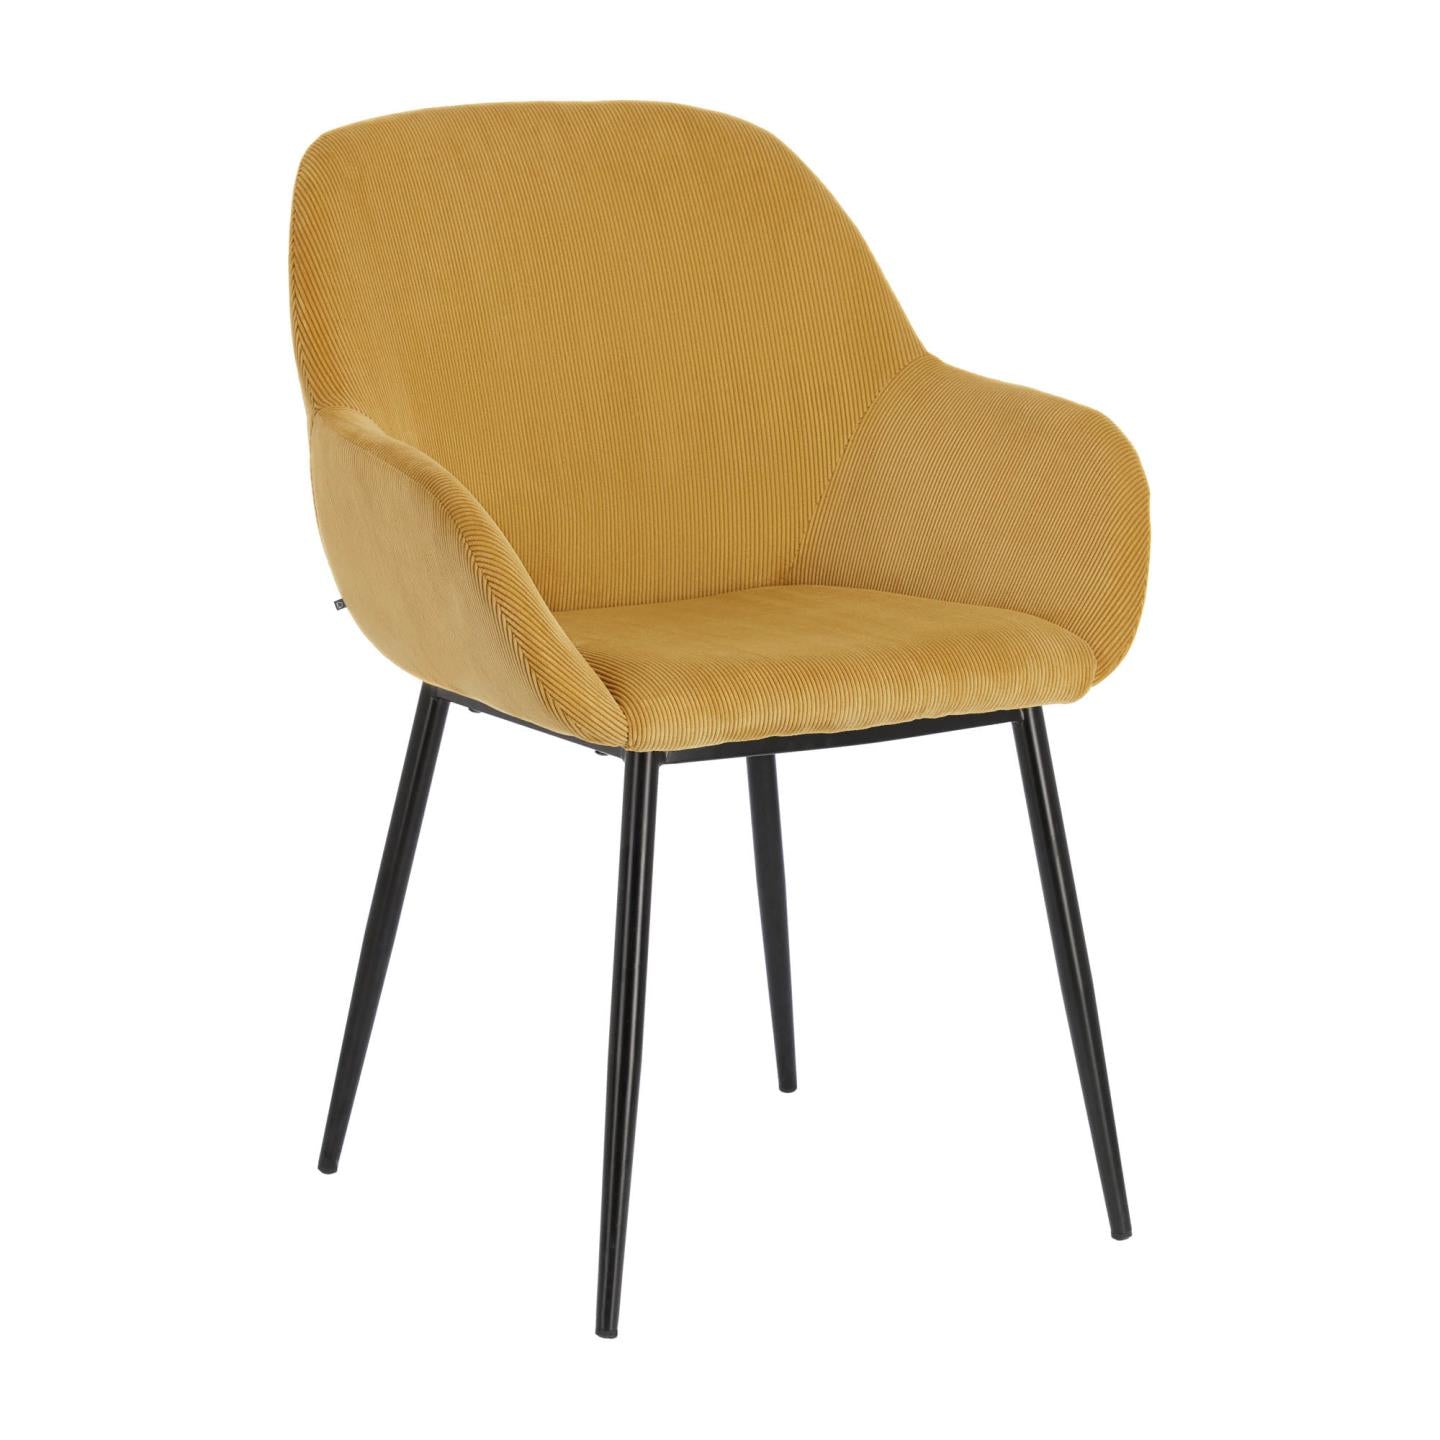 Konna mustard corduroy chair